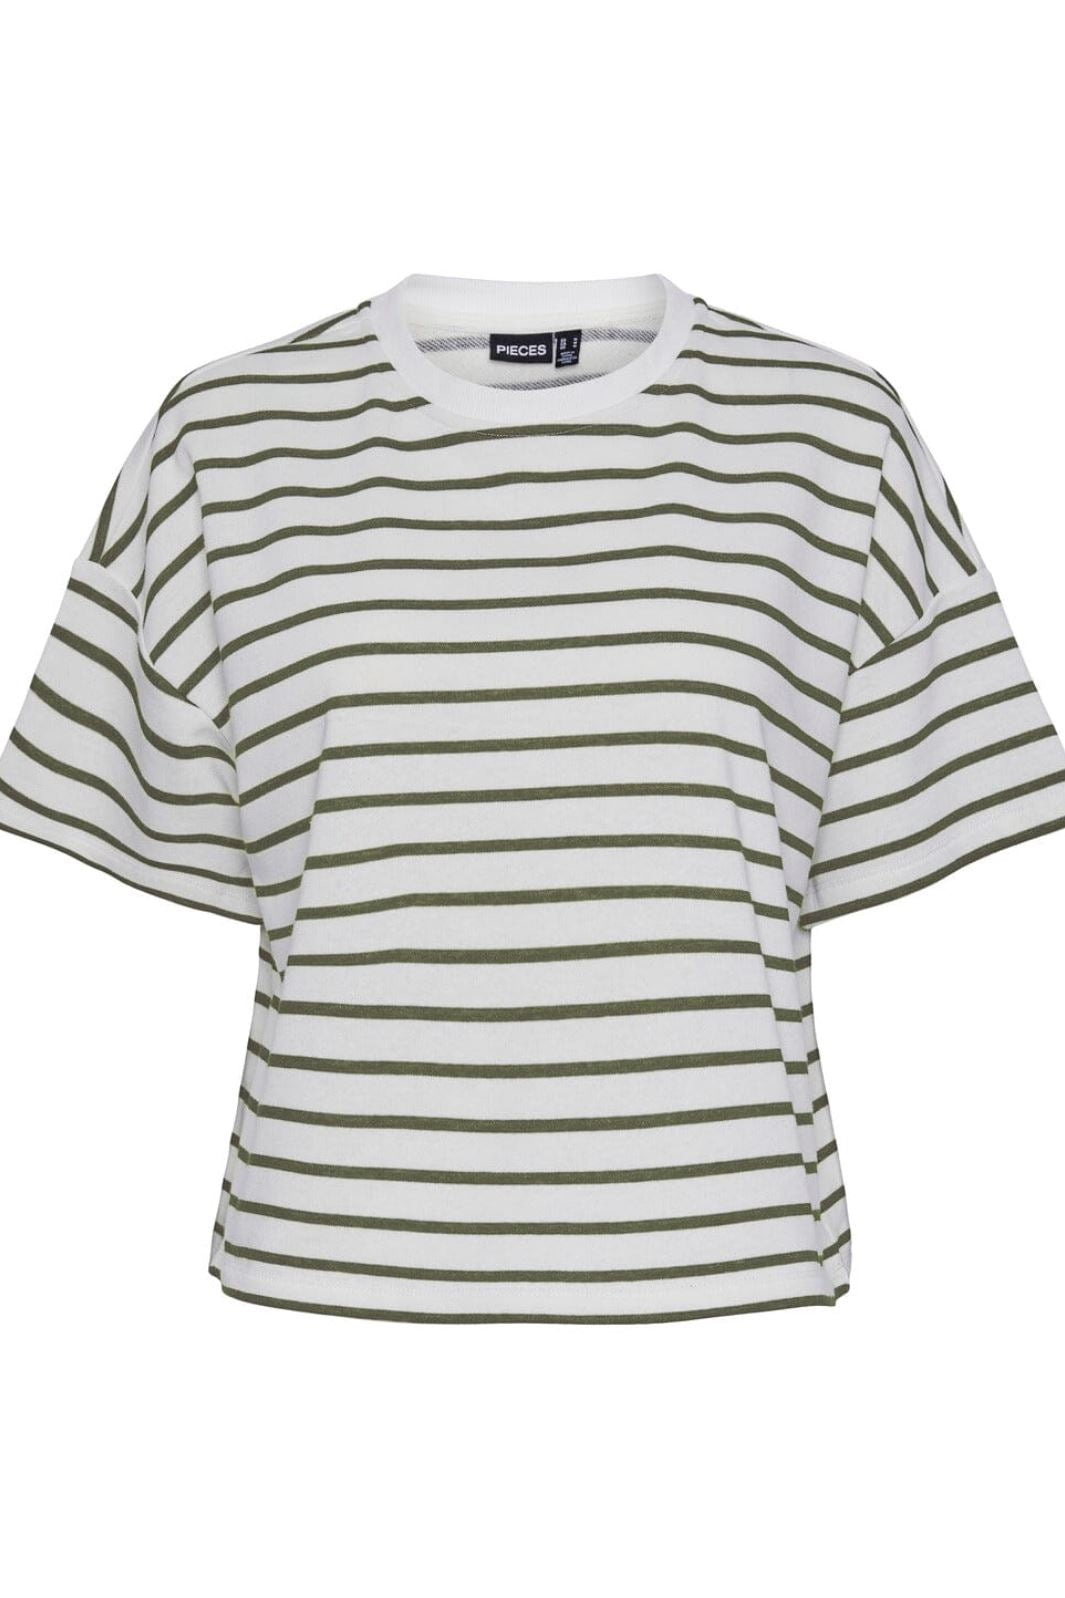 Pieces - Pcchilli Summer 2/4 Sweat Stripe - 4476193 Cloud Dancer Deep Lichen Green T-shirts 